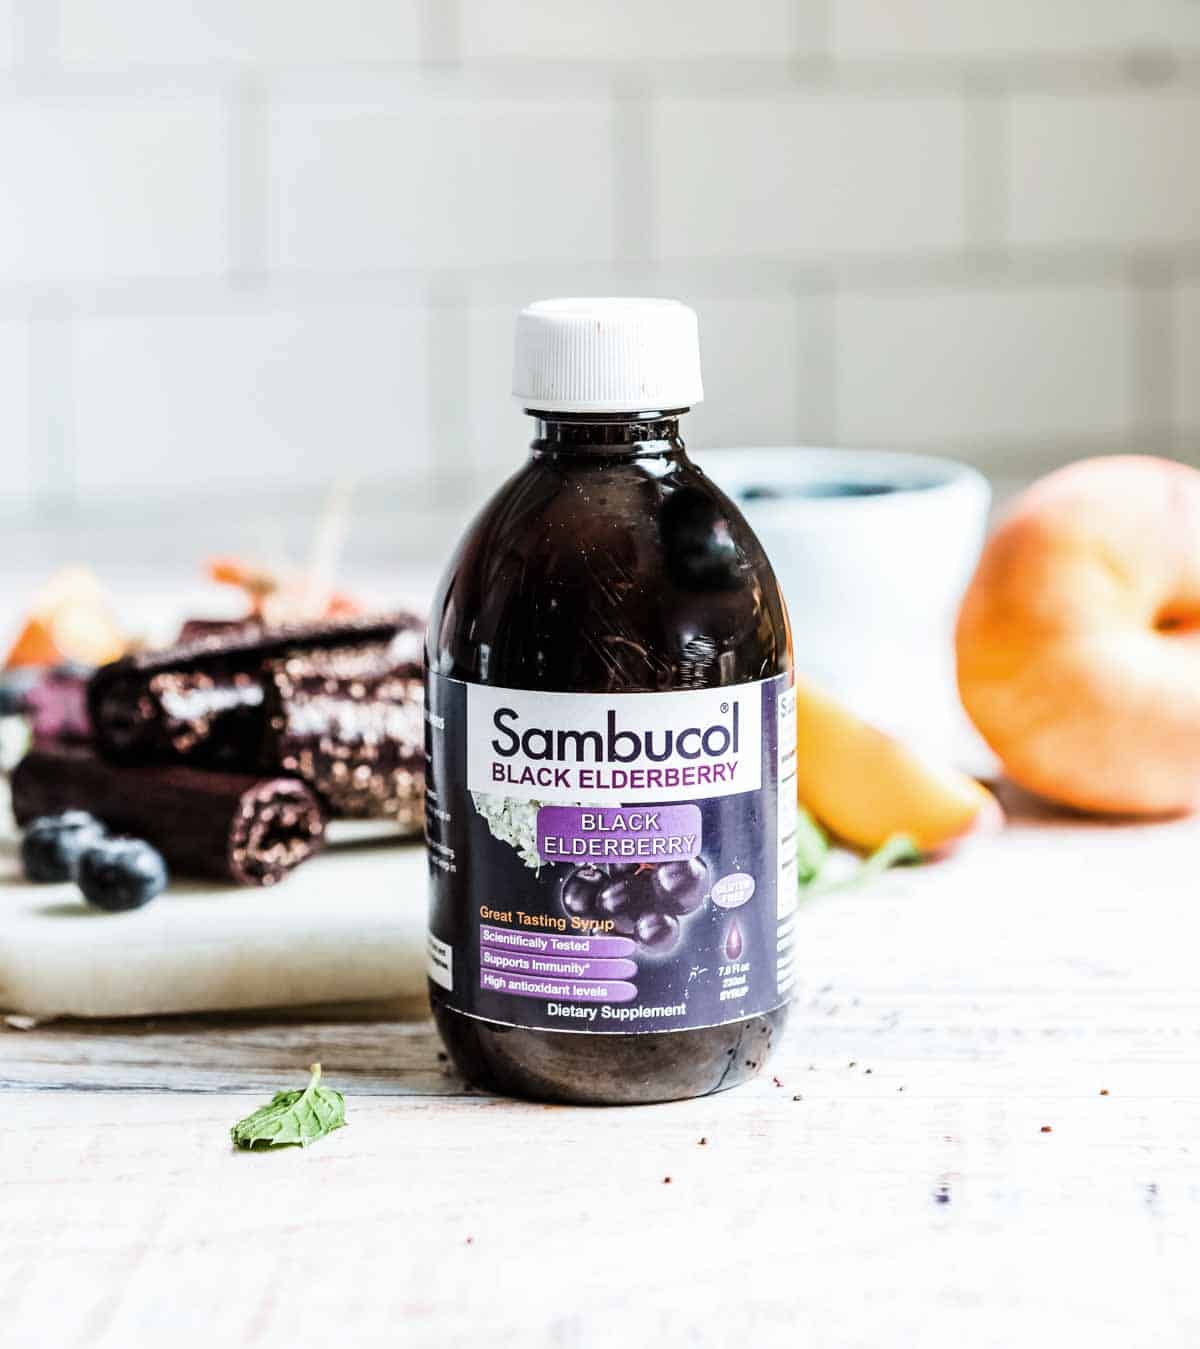 immune boosting elderberry syrup by Sambucol.